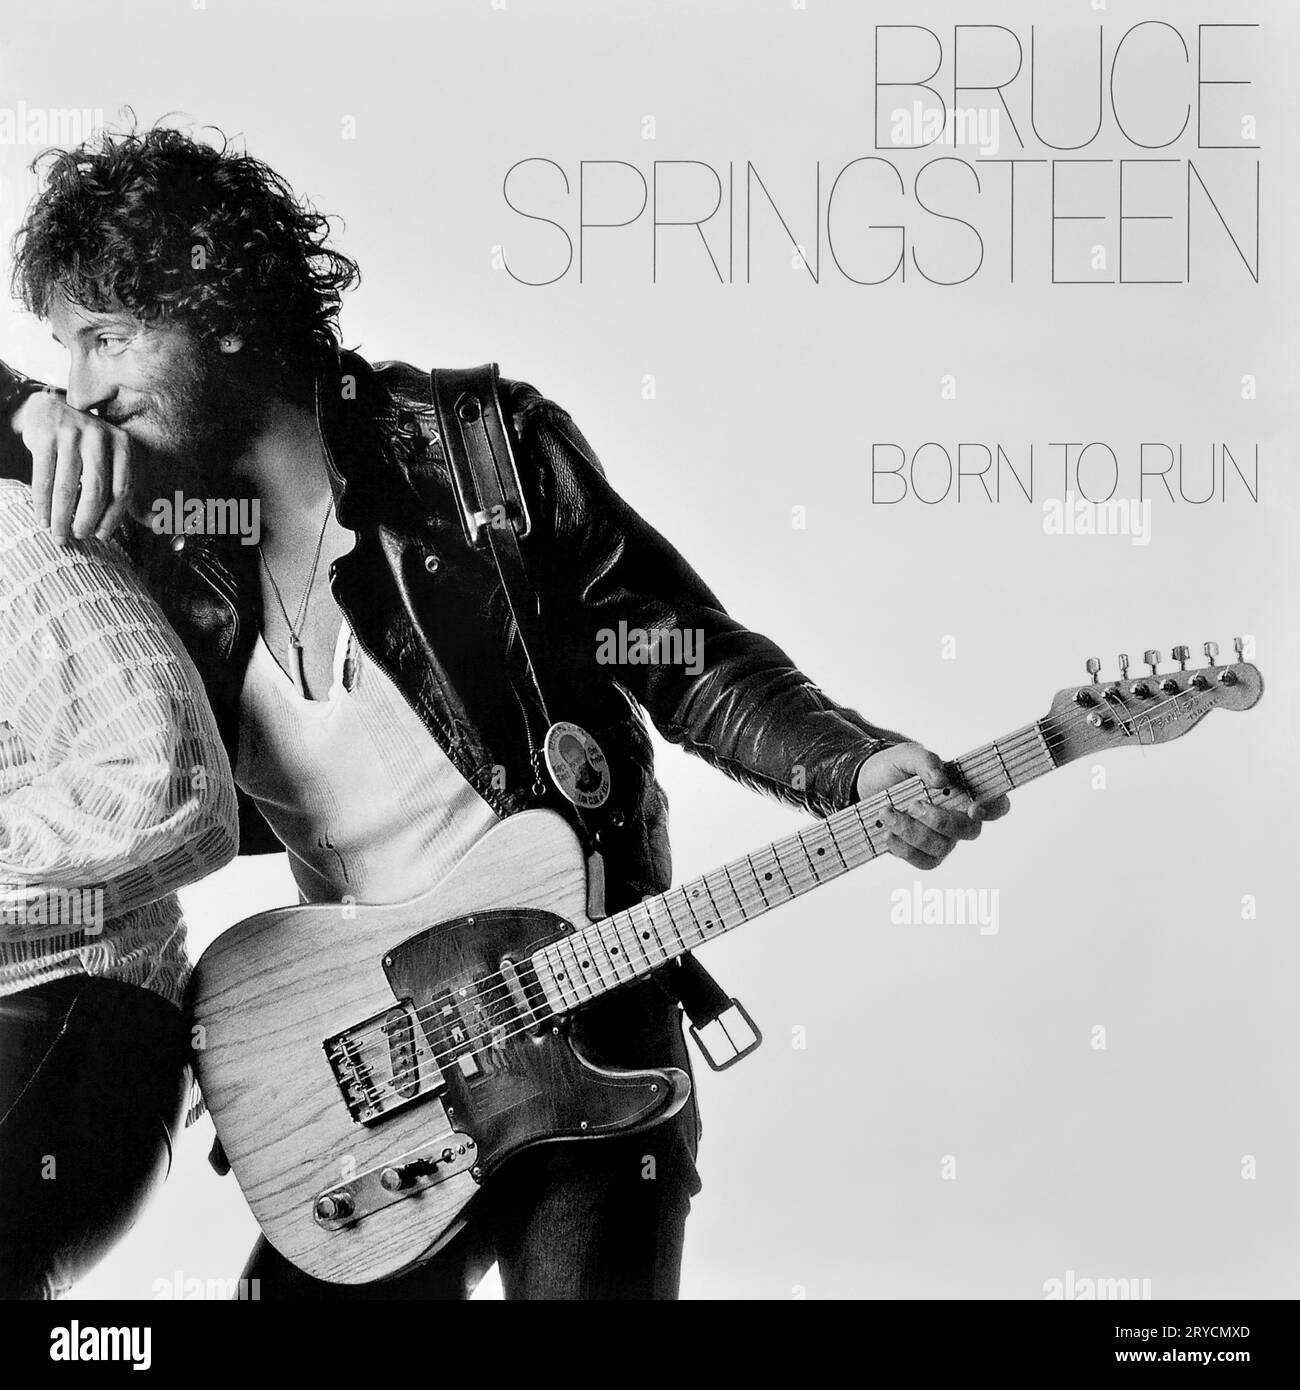 Bruce Springsteen - original vinyl album cover - Born To Run - 1975 Stock Photo